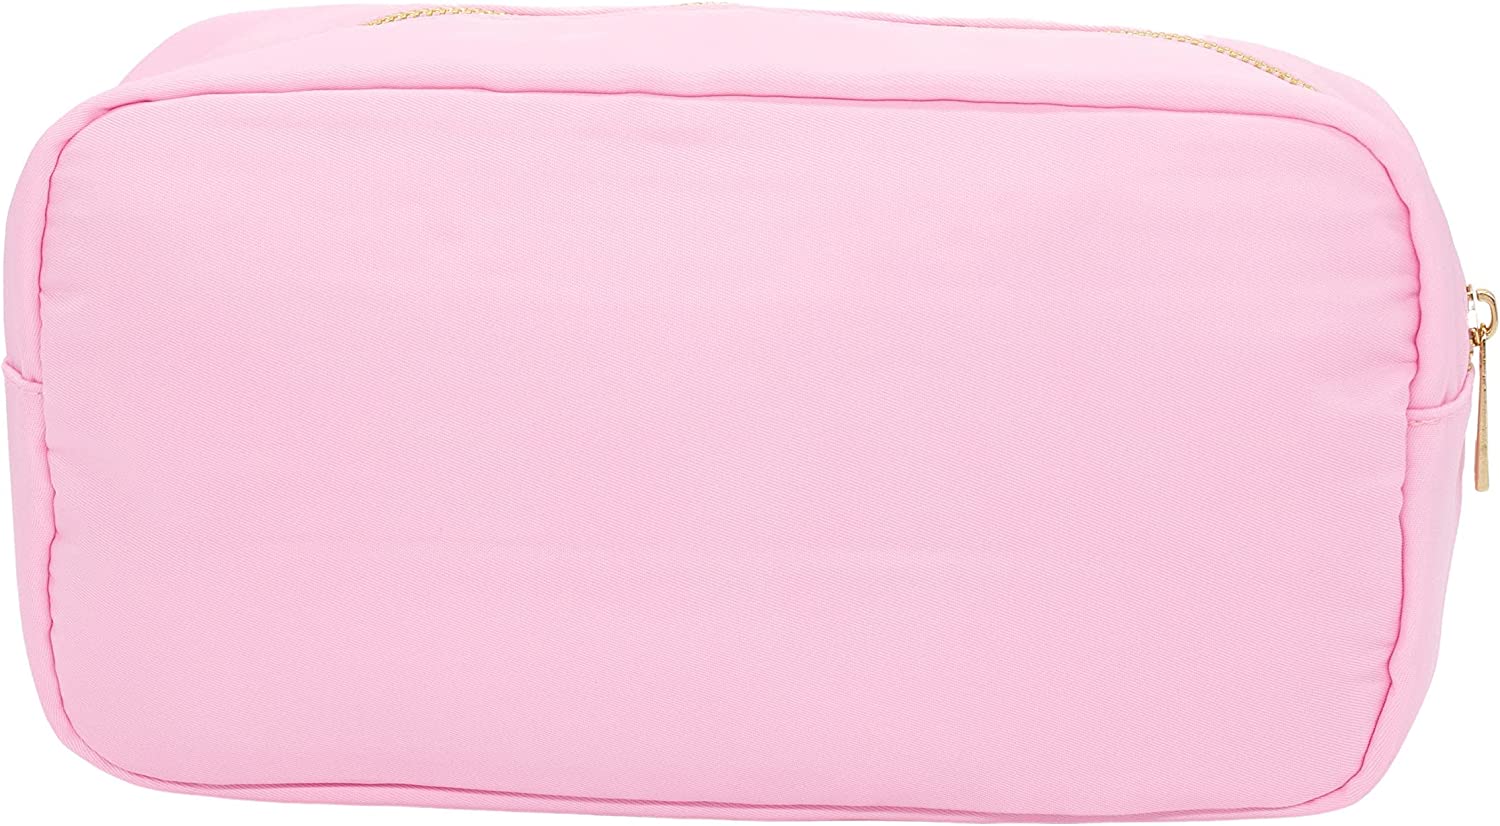 Round Nylon Cosmetic Bag - The Pink Porcupine ltd.